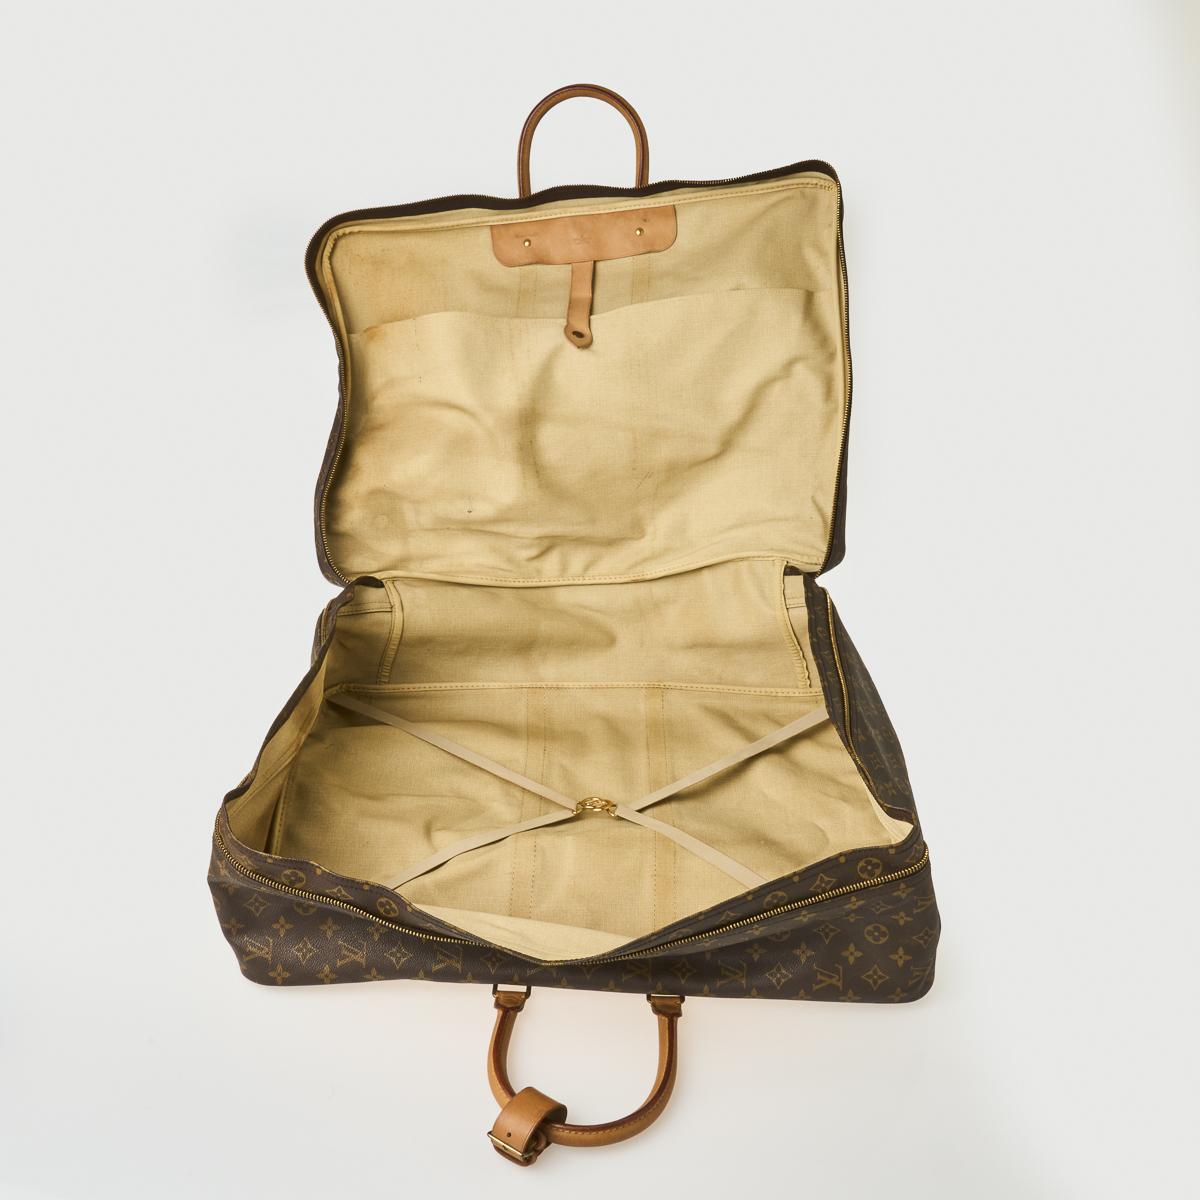 Sold at Auction: Louis Vuitton, LOUIS VUITTON, REISETASCHE SIRIUS 60